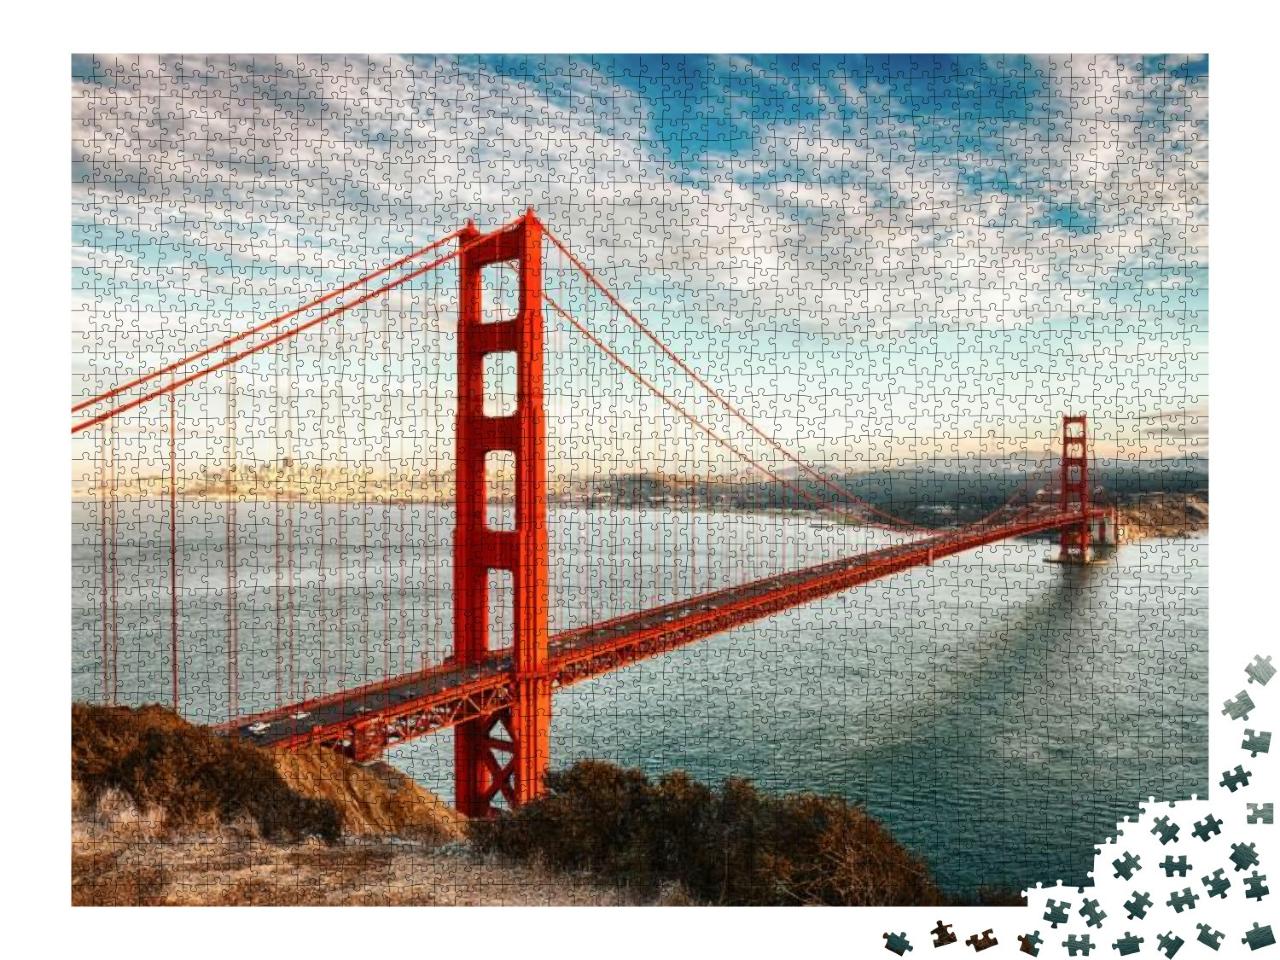 Puzzle 2000 Teile „Golden Gate Bridge, San Francisco, USA“